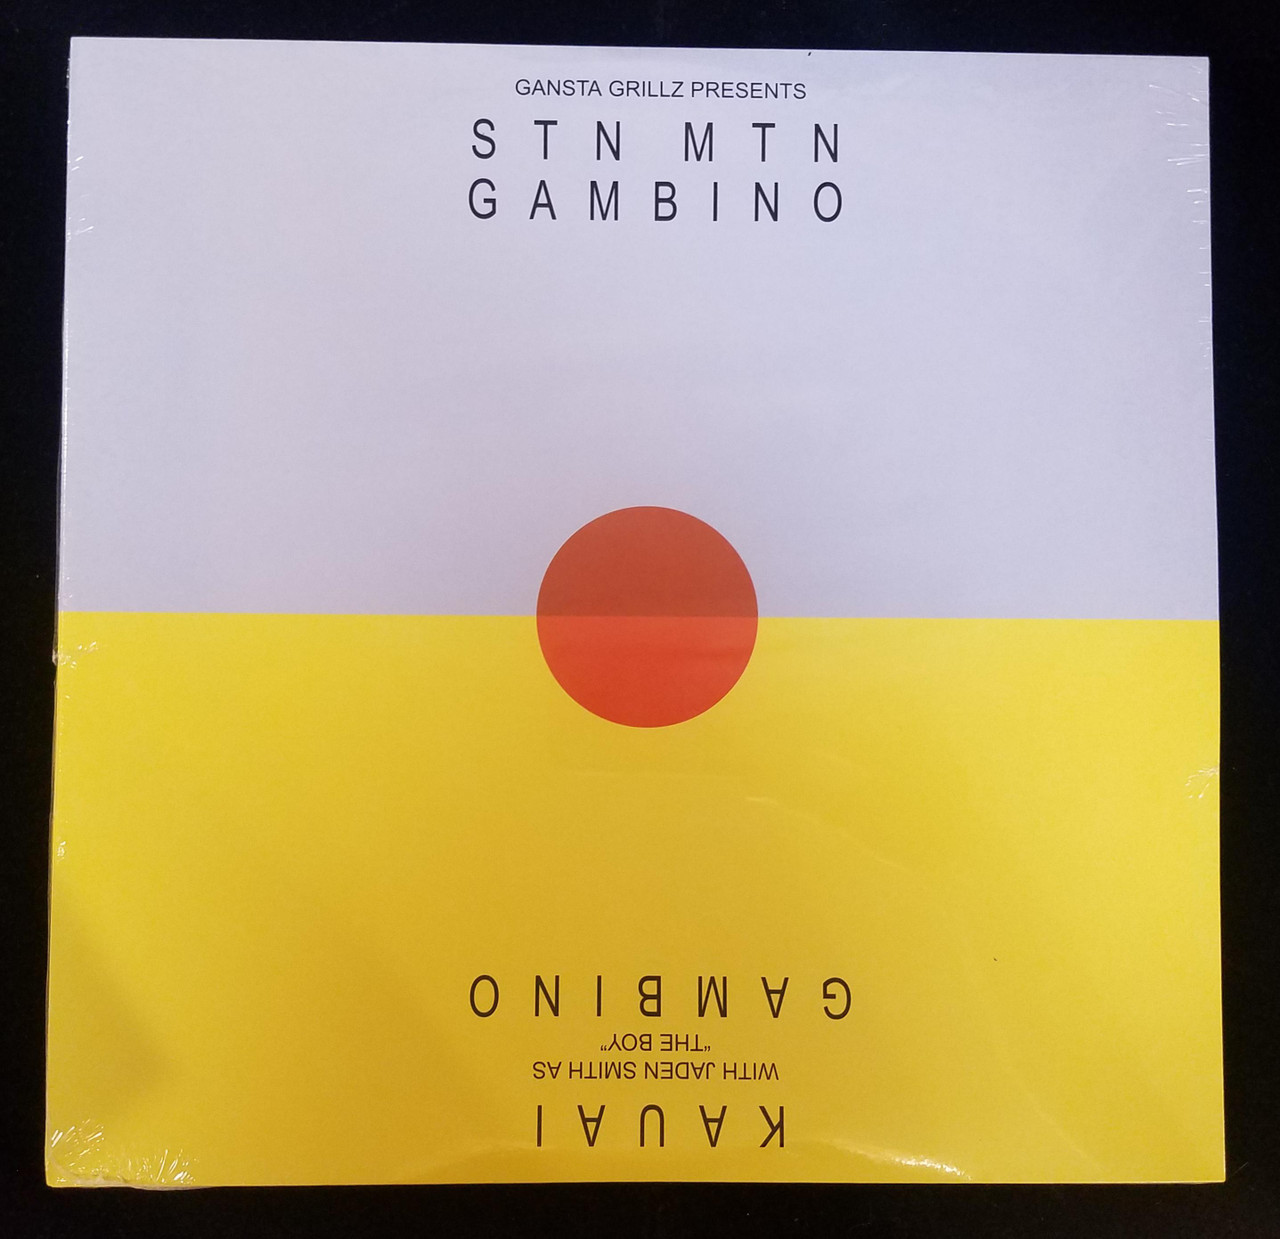 Peru Smigre Assimilate Childish Gambino - Stn Mtn / Kauai - 2x LP Vinyl | Ear Candy Music